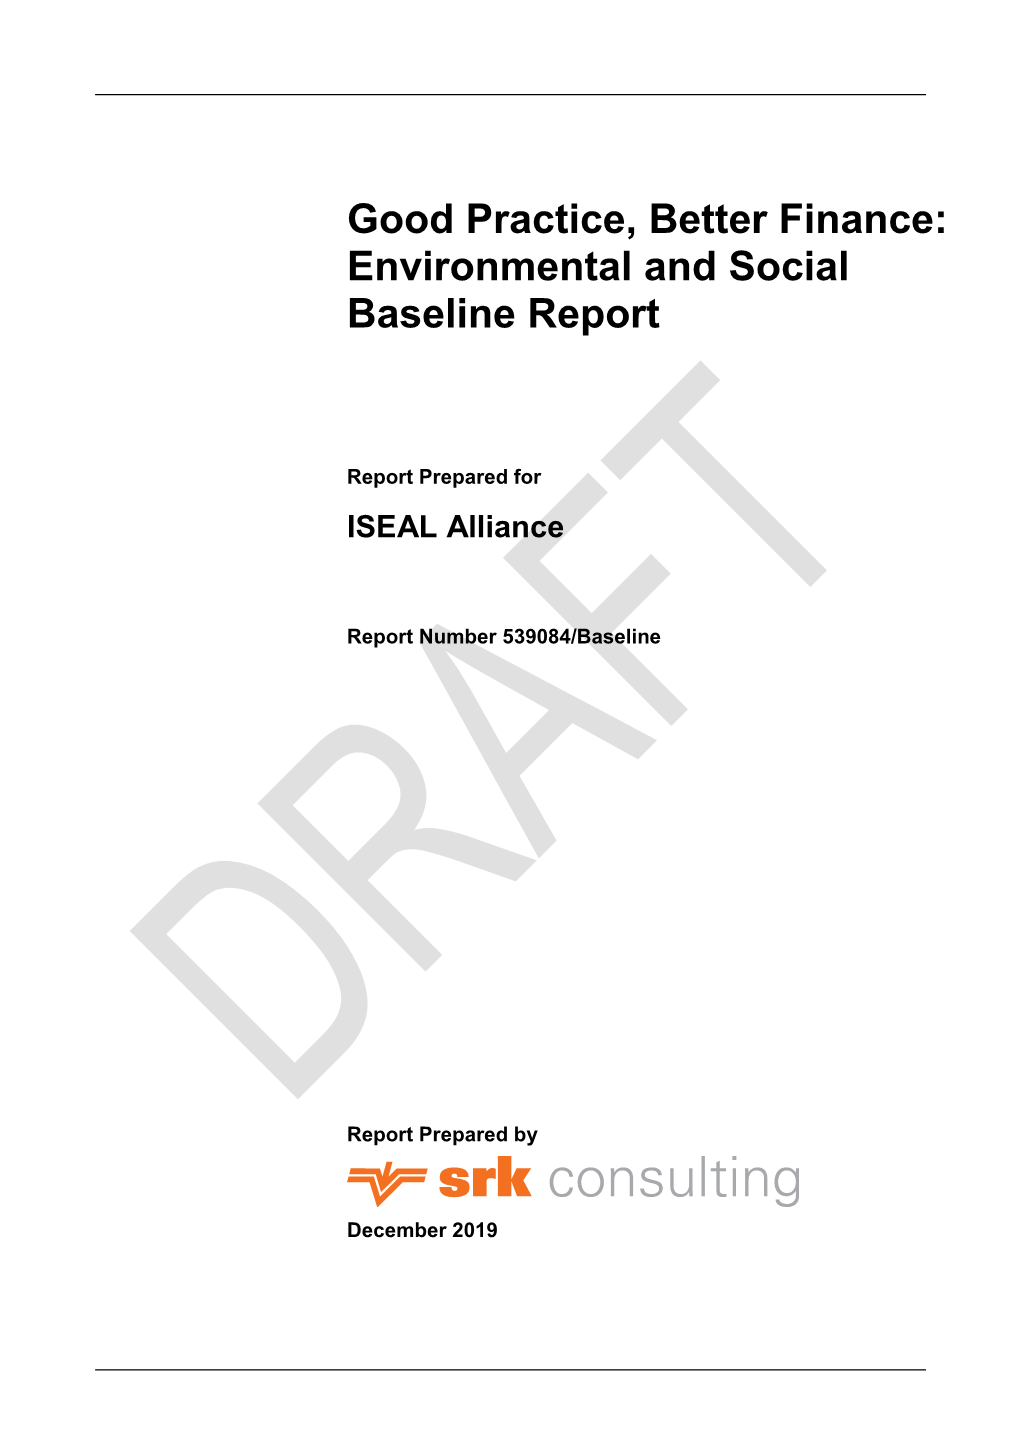 Environmental and Social Baseline Report